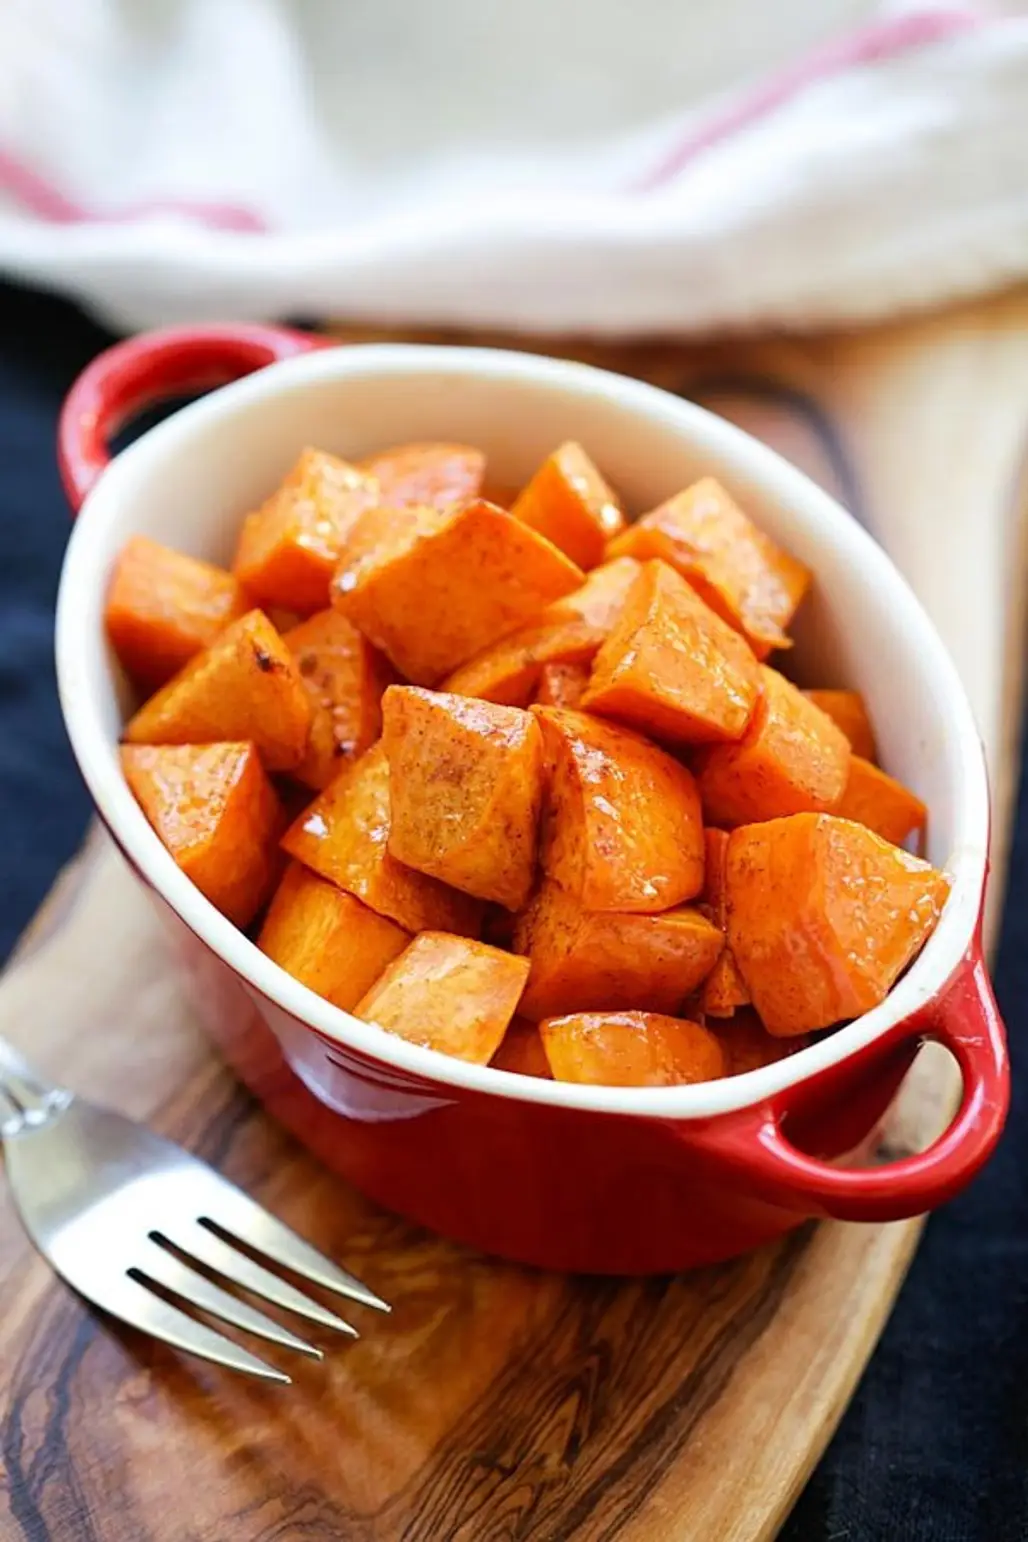 Roasted Sweet Potatoes with Cinnamon and Honey – YUM!